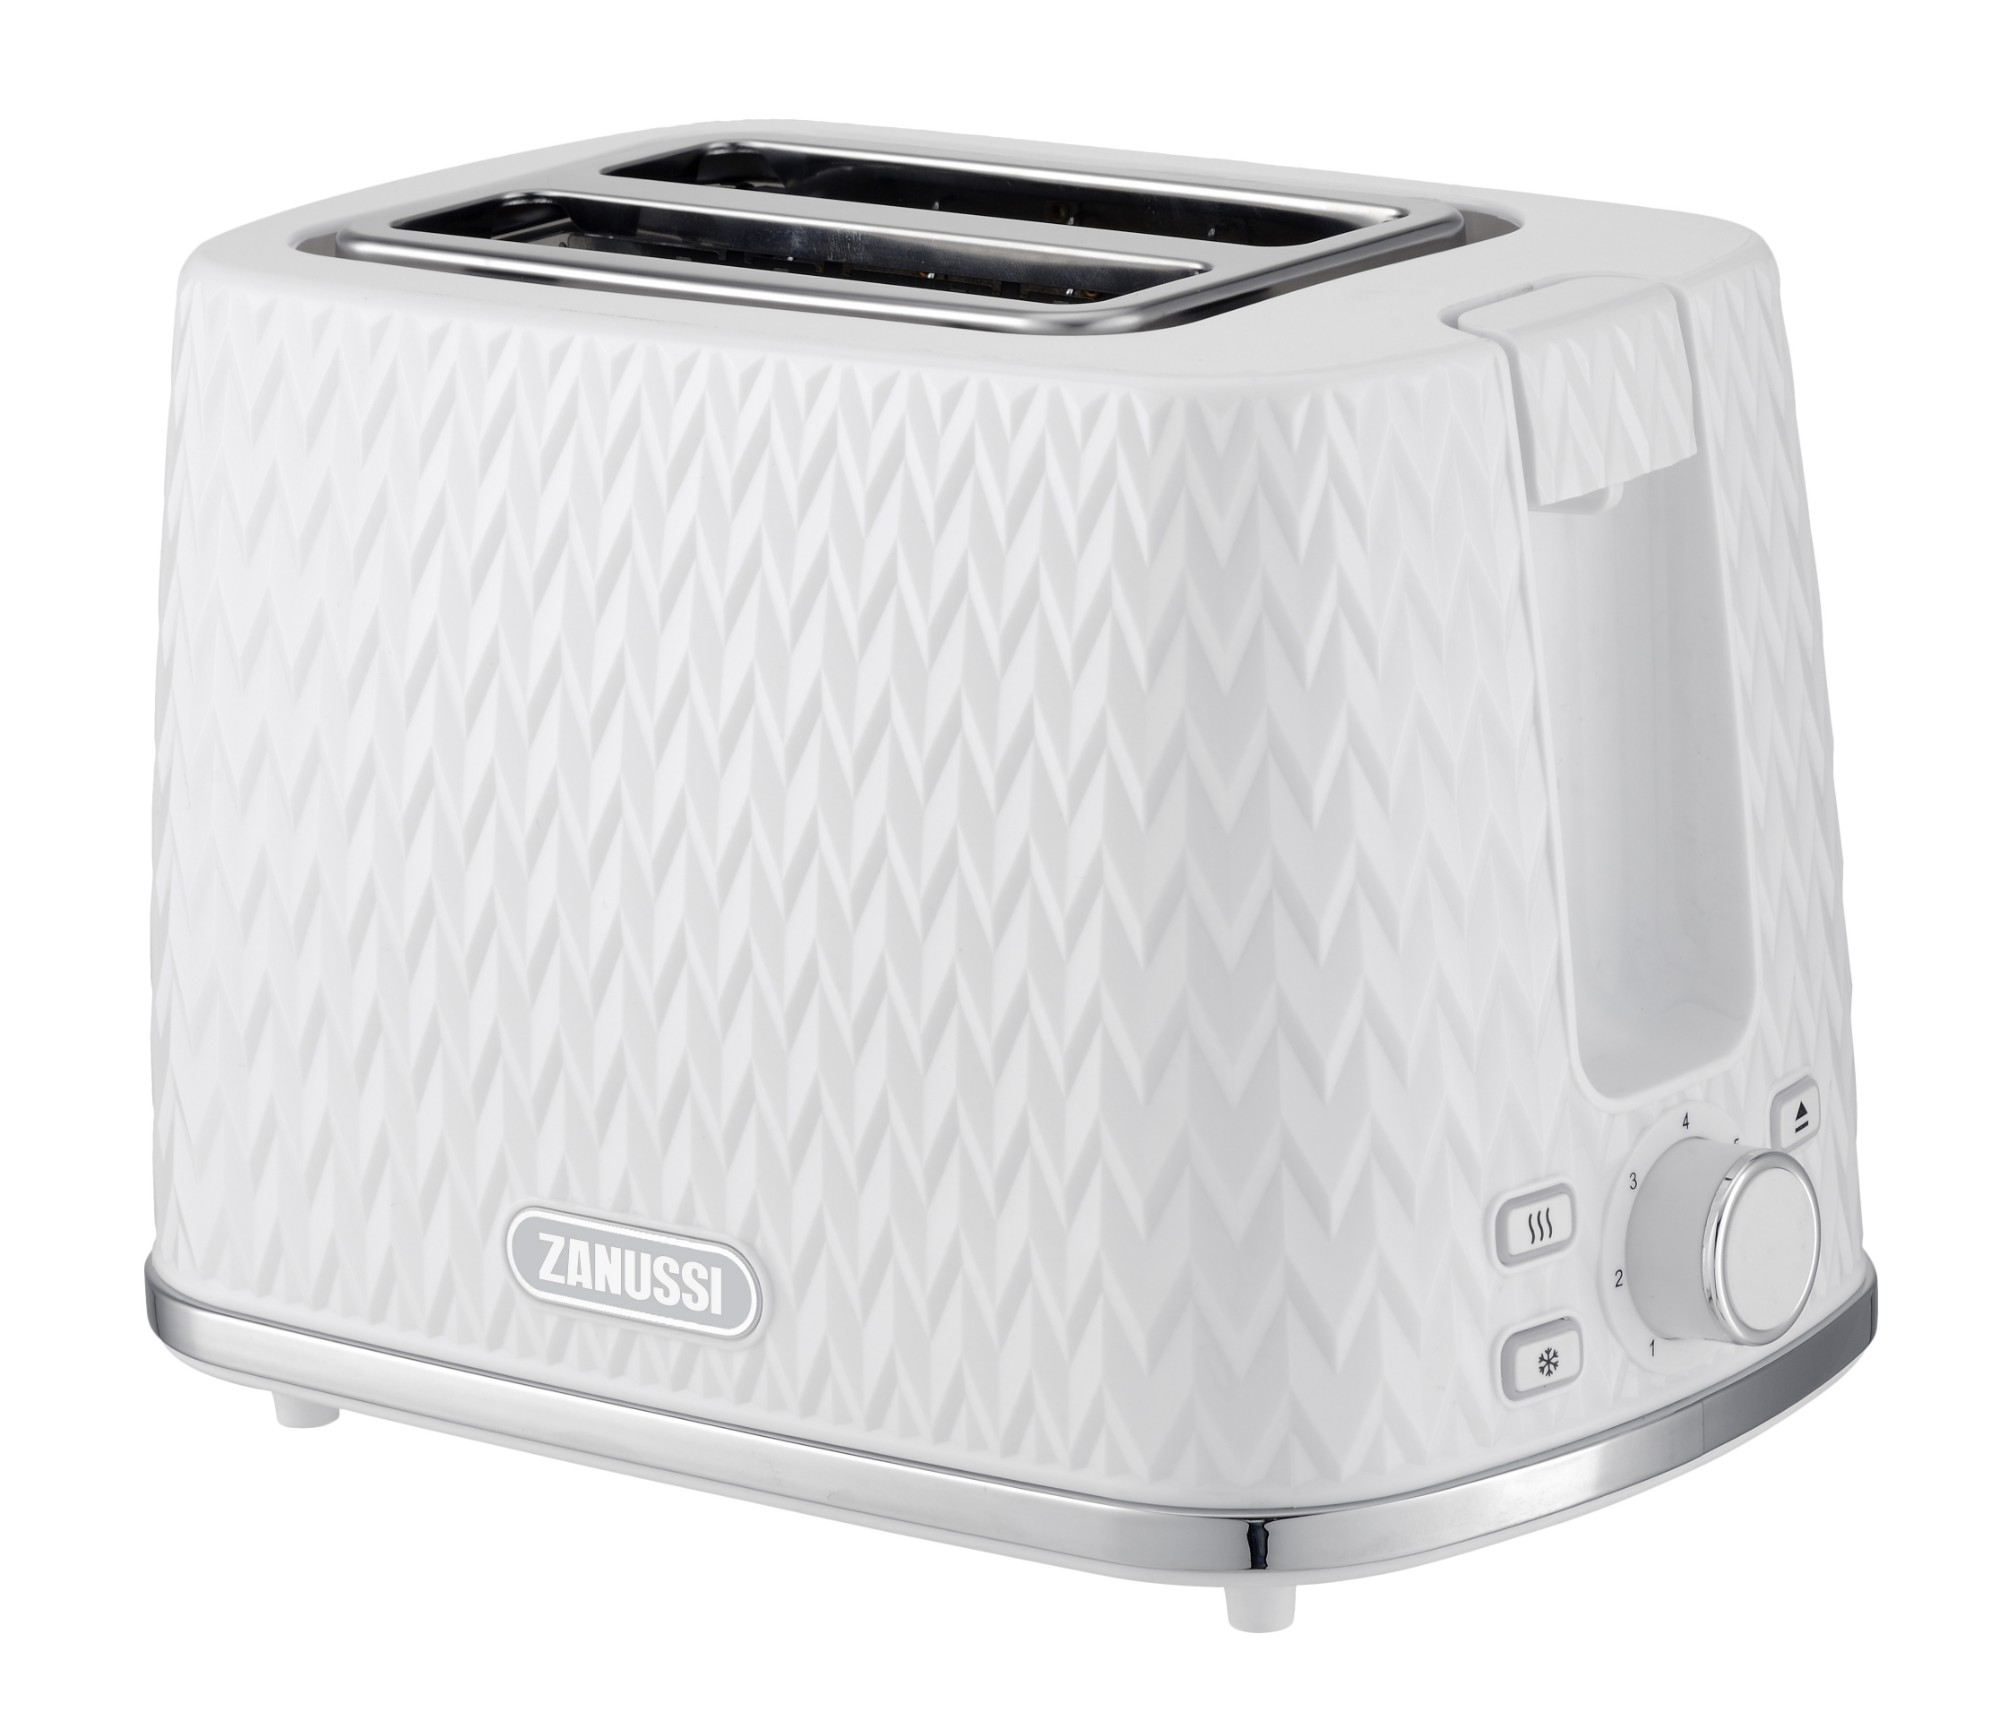 Zanussi ZST-6550-WT toaster 2 slice(s) 930 W White